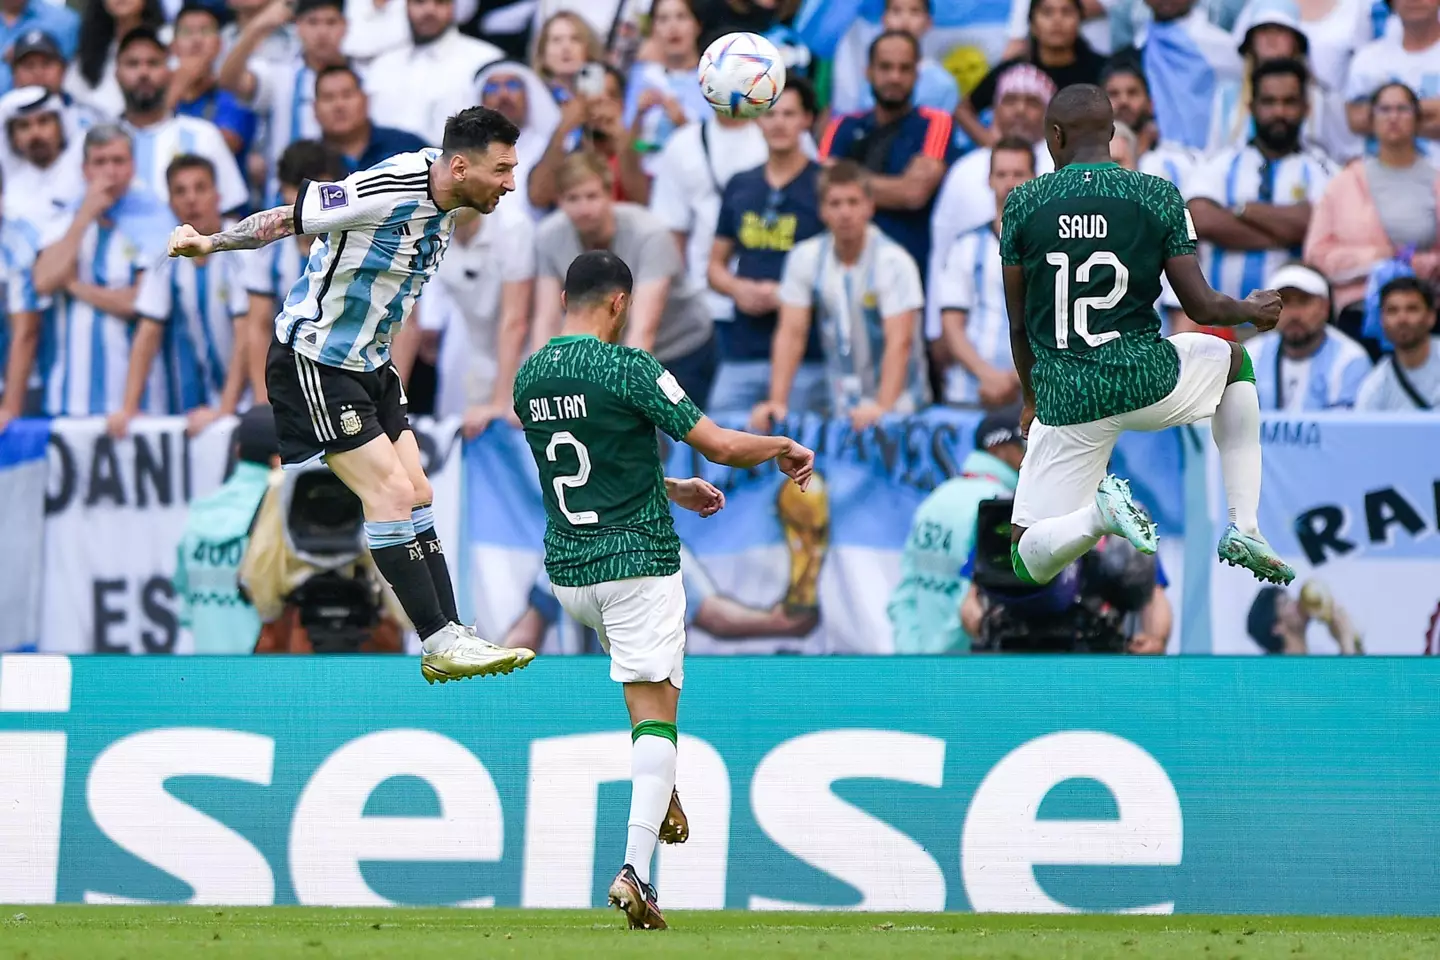 Lionel Messi of Argentinia wins a defensive header against Sultan Alghannam of Saudi Arabia.